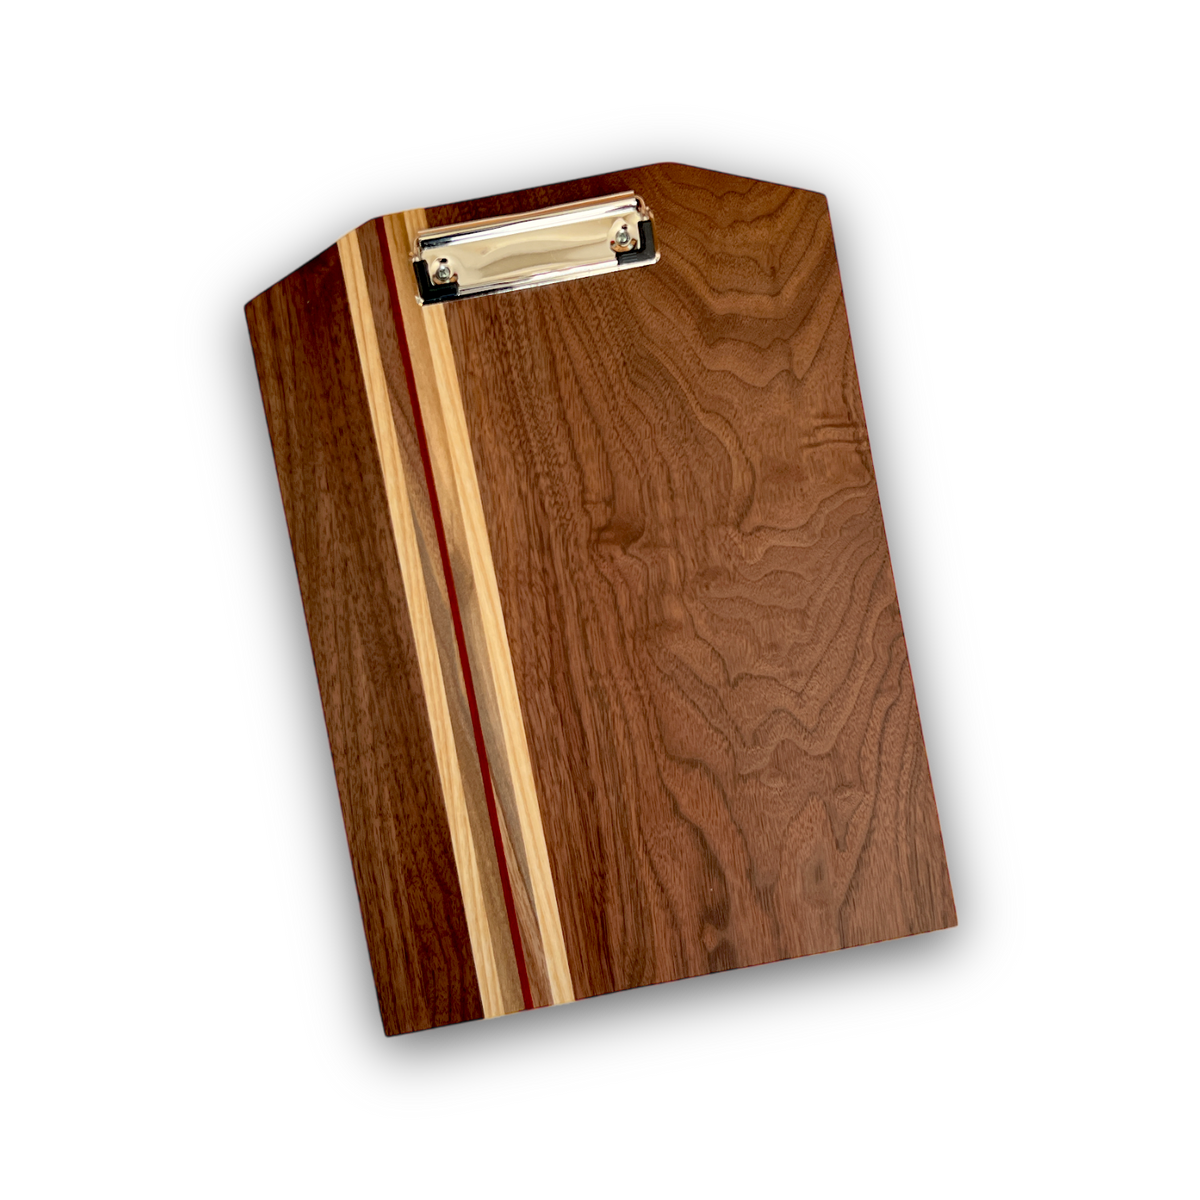 Wooden Clipboard